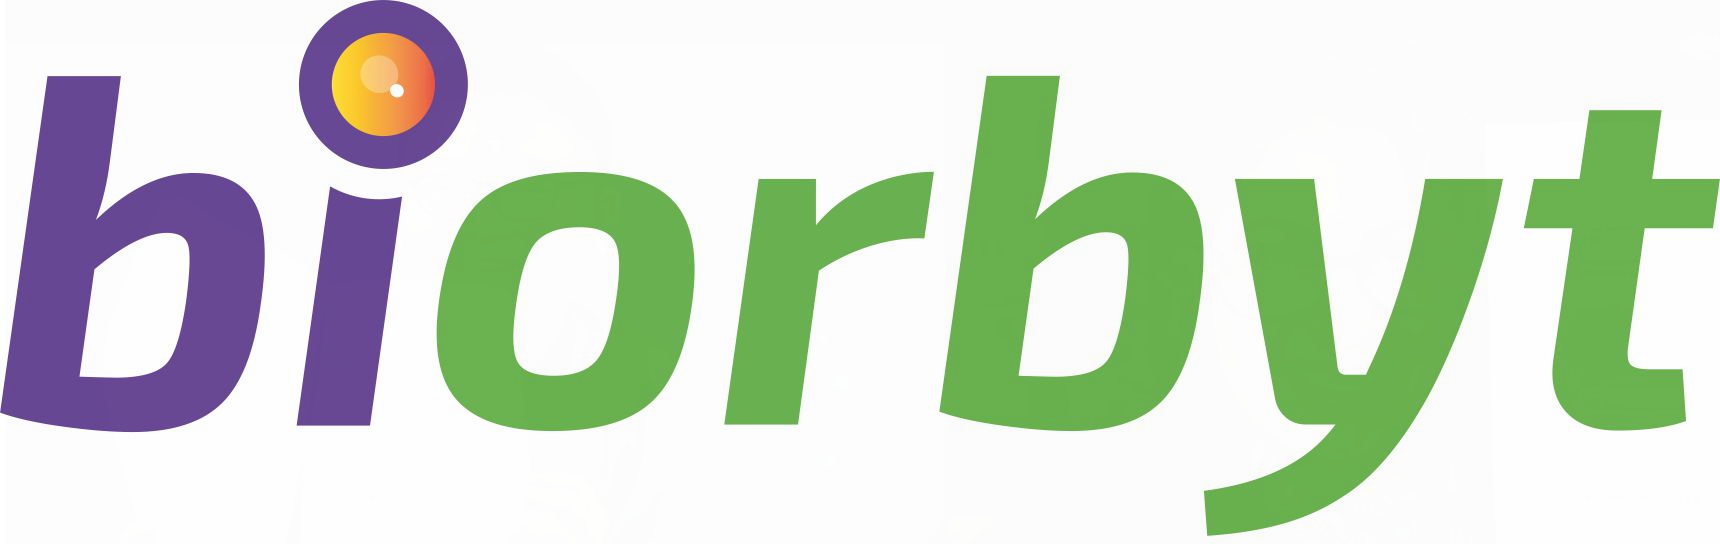 logo-de-alta resolución-biorbyt-sin-strapline